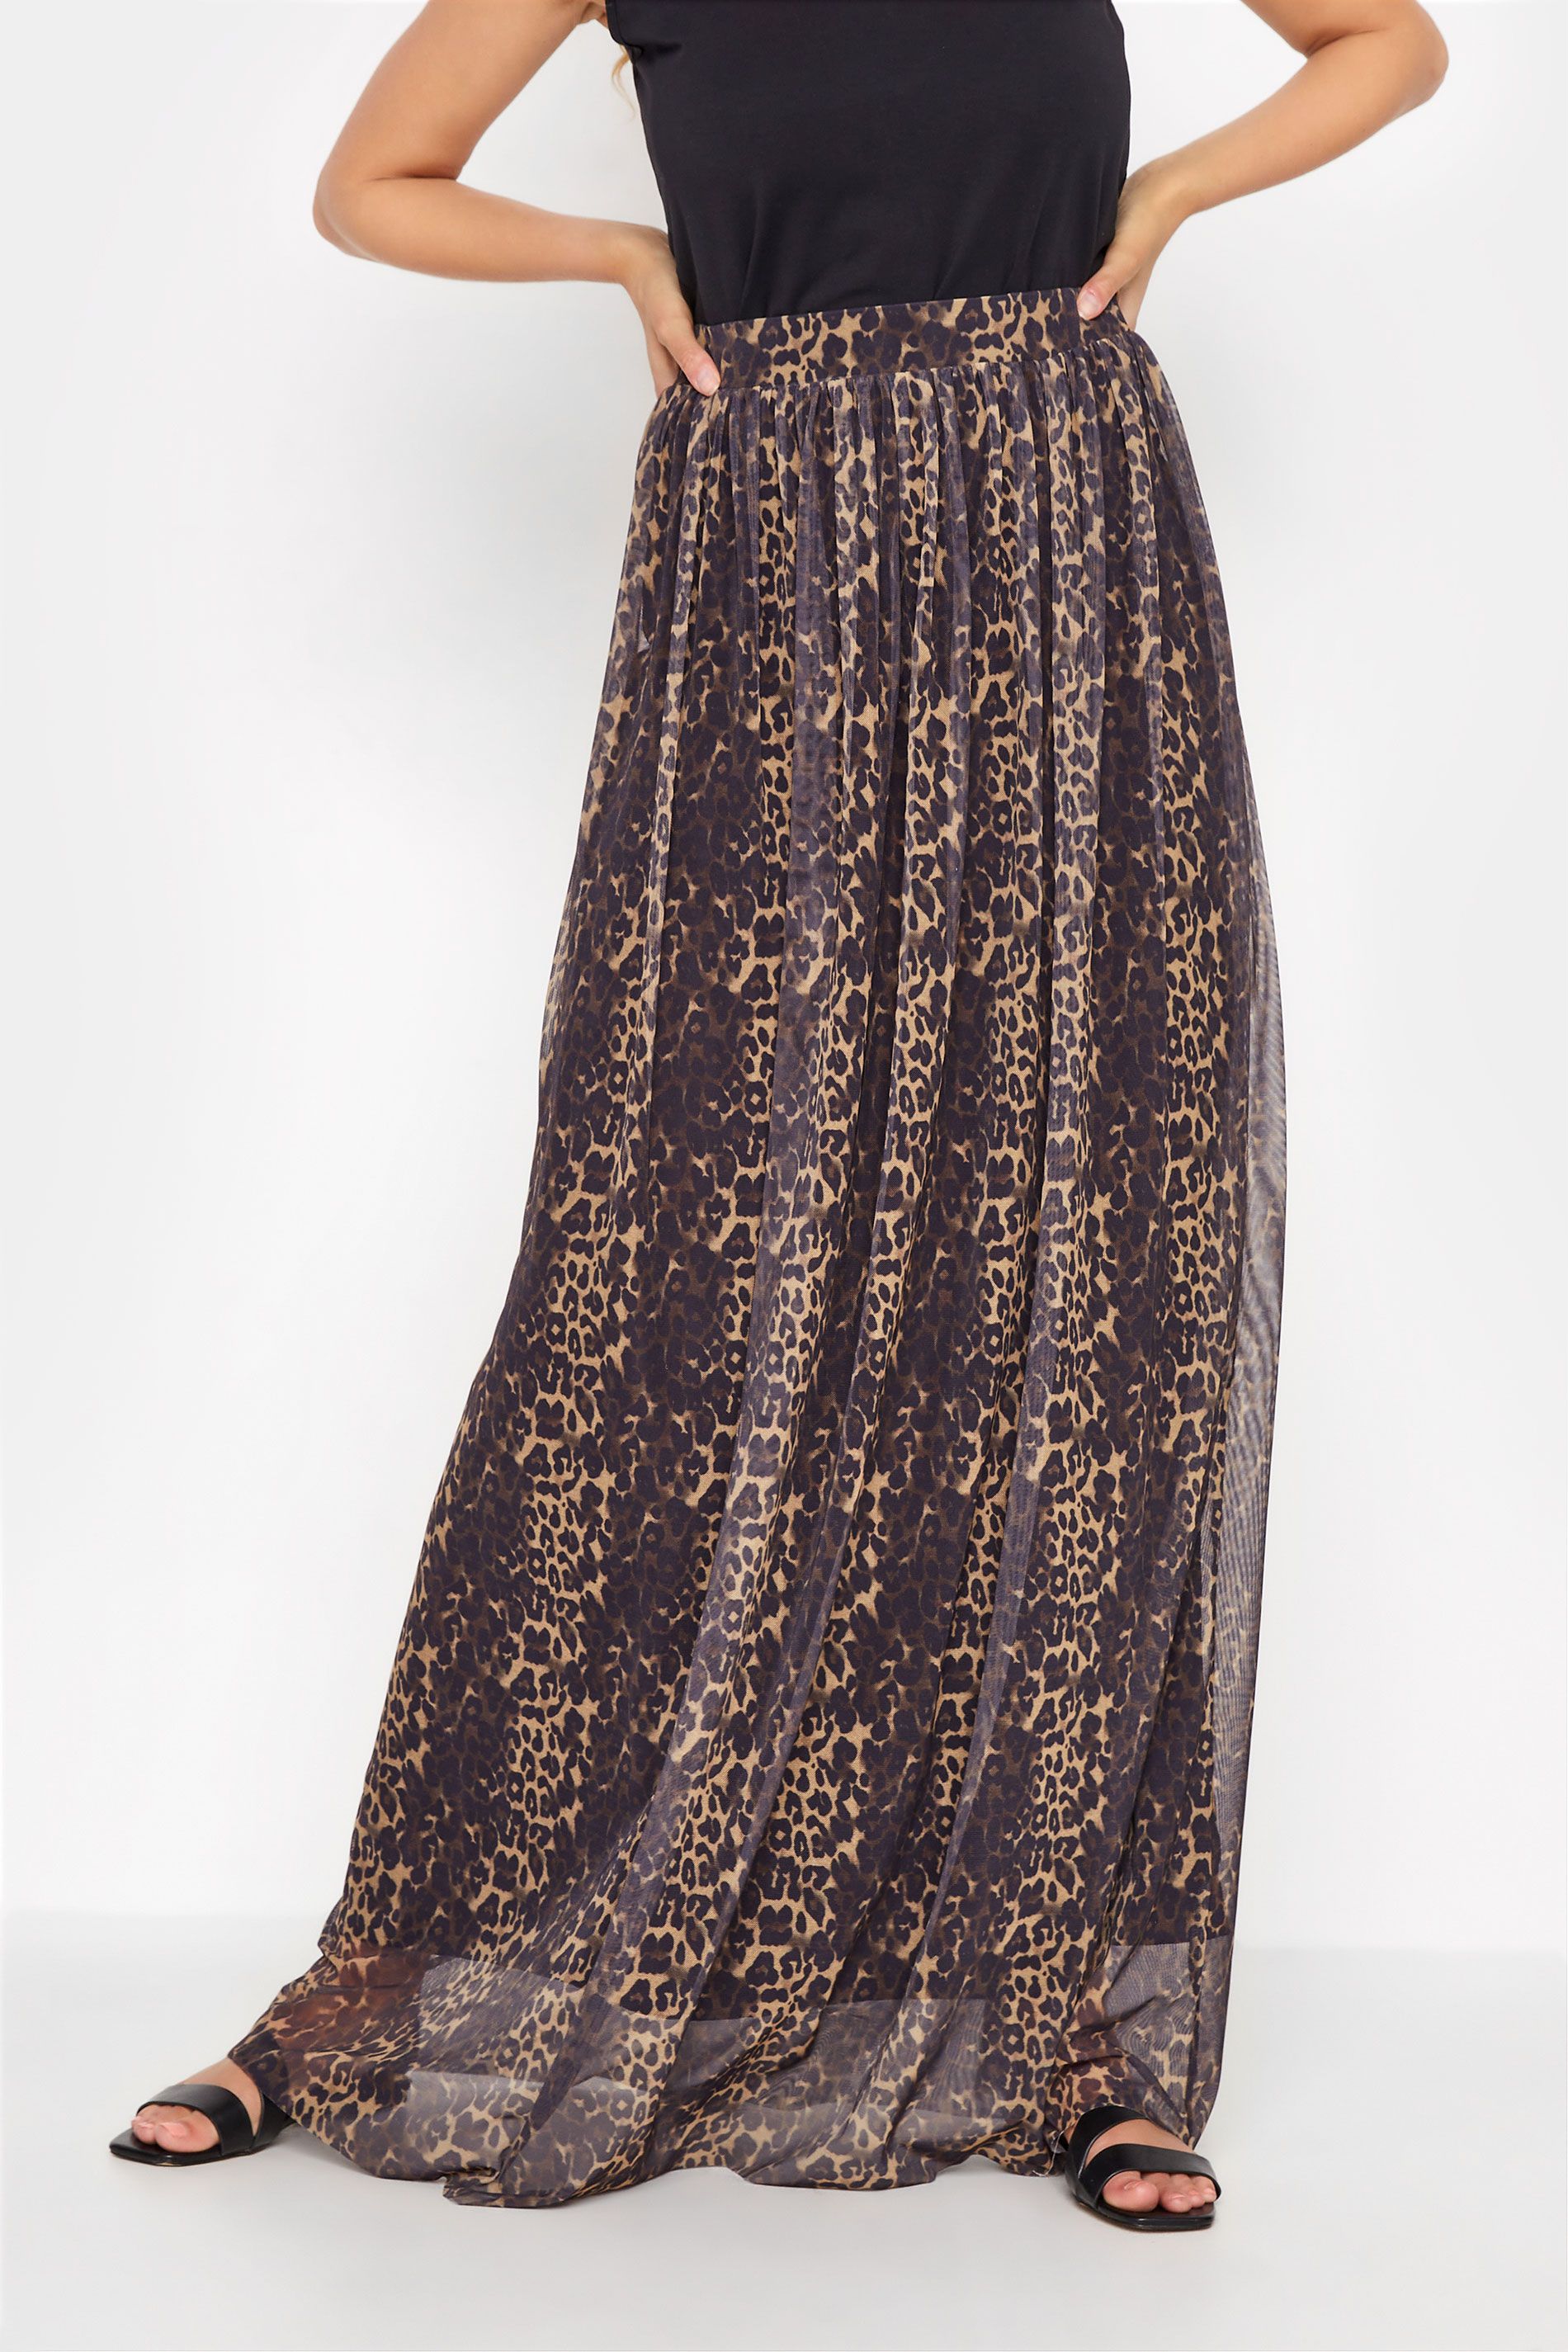 LTS Tall Brown Leopard Print Mesh Maxi Skirt | Long Tall Sally